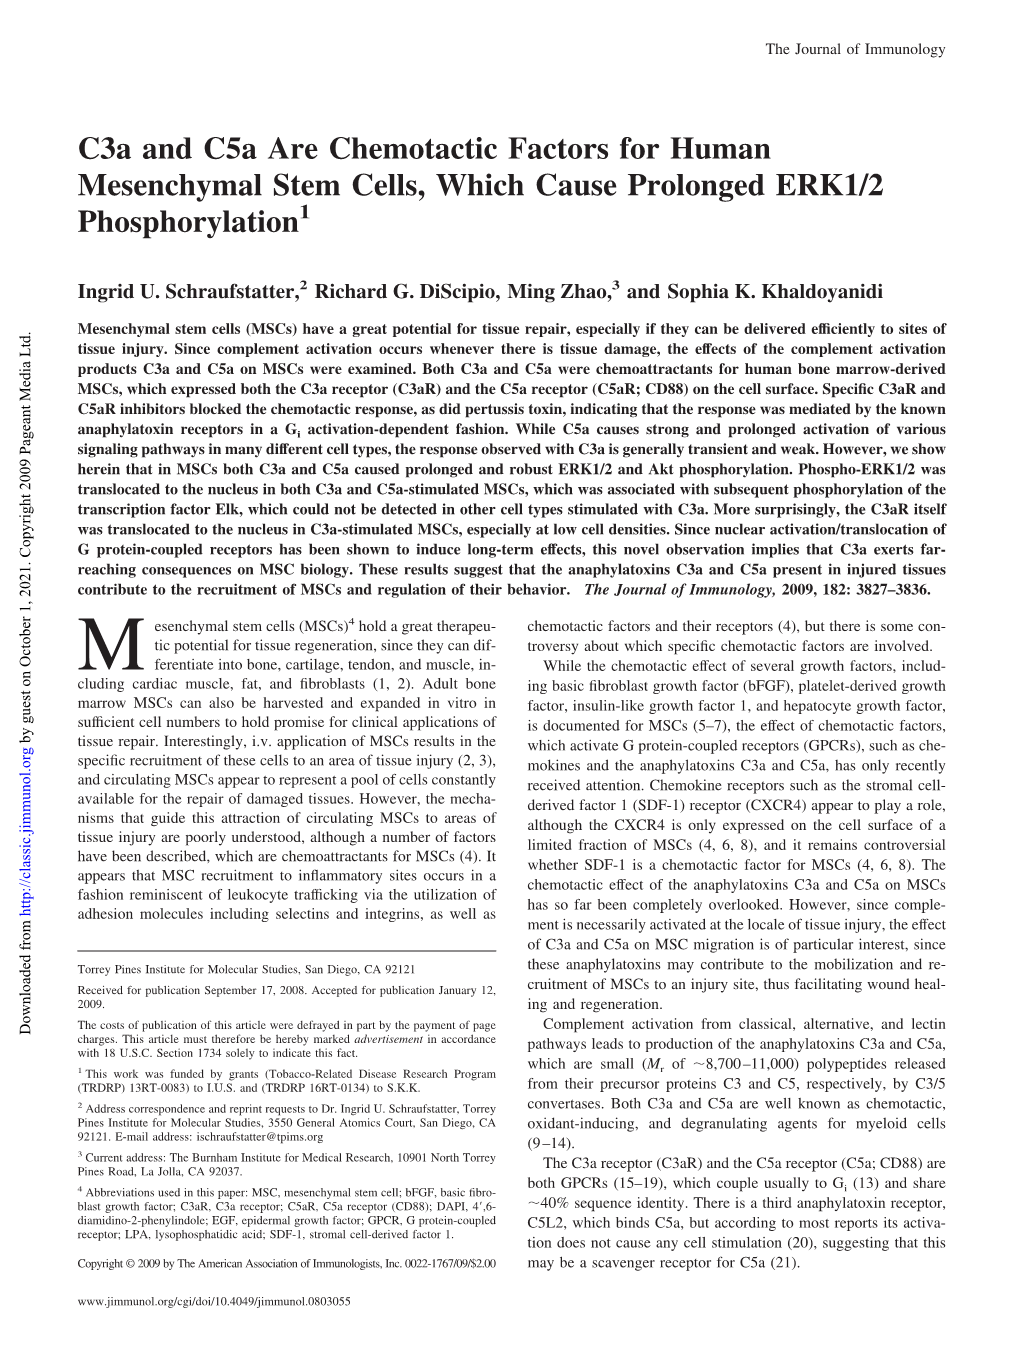 Cause Prolonged ERK1/2 Phosphorylation Human